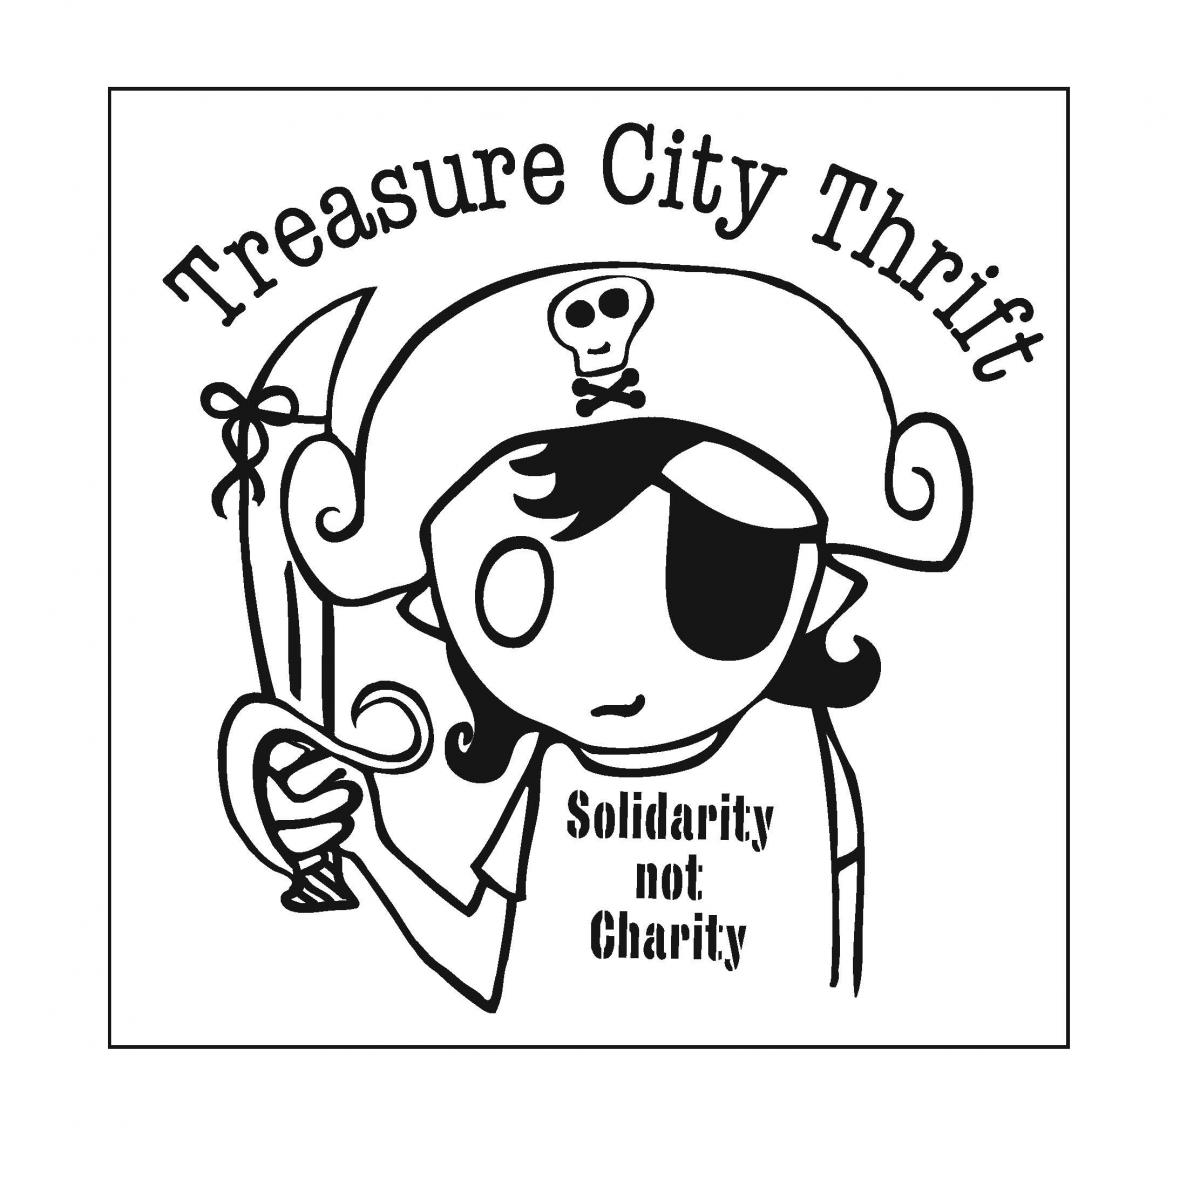 Treasure City Thrift